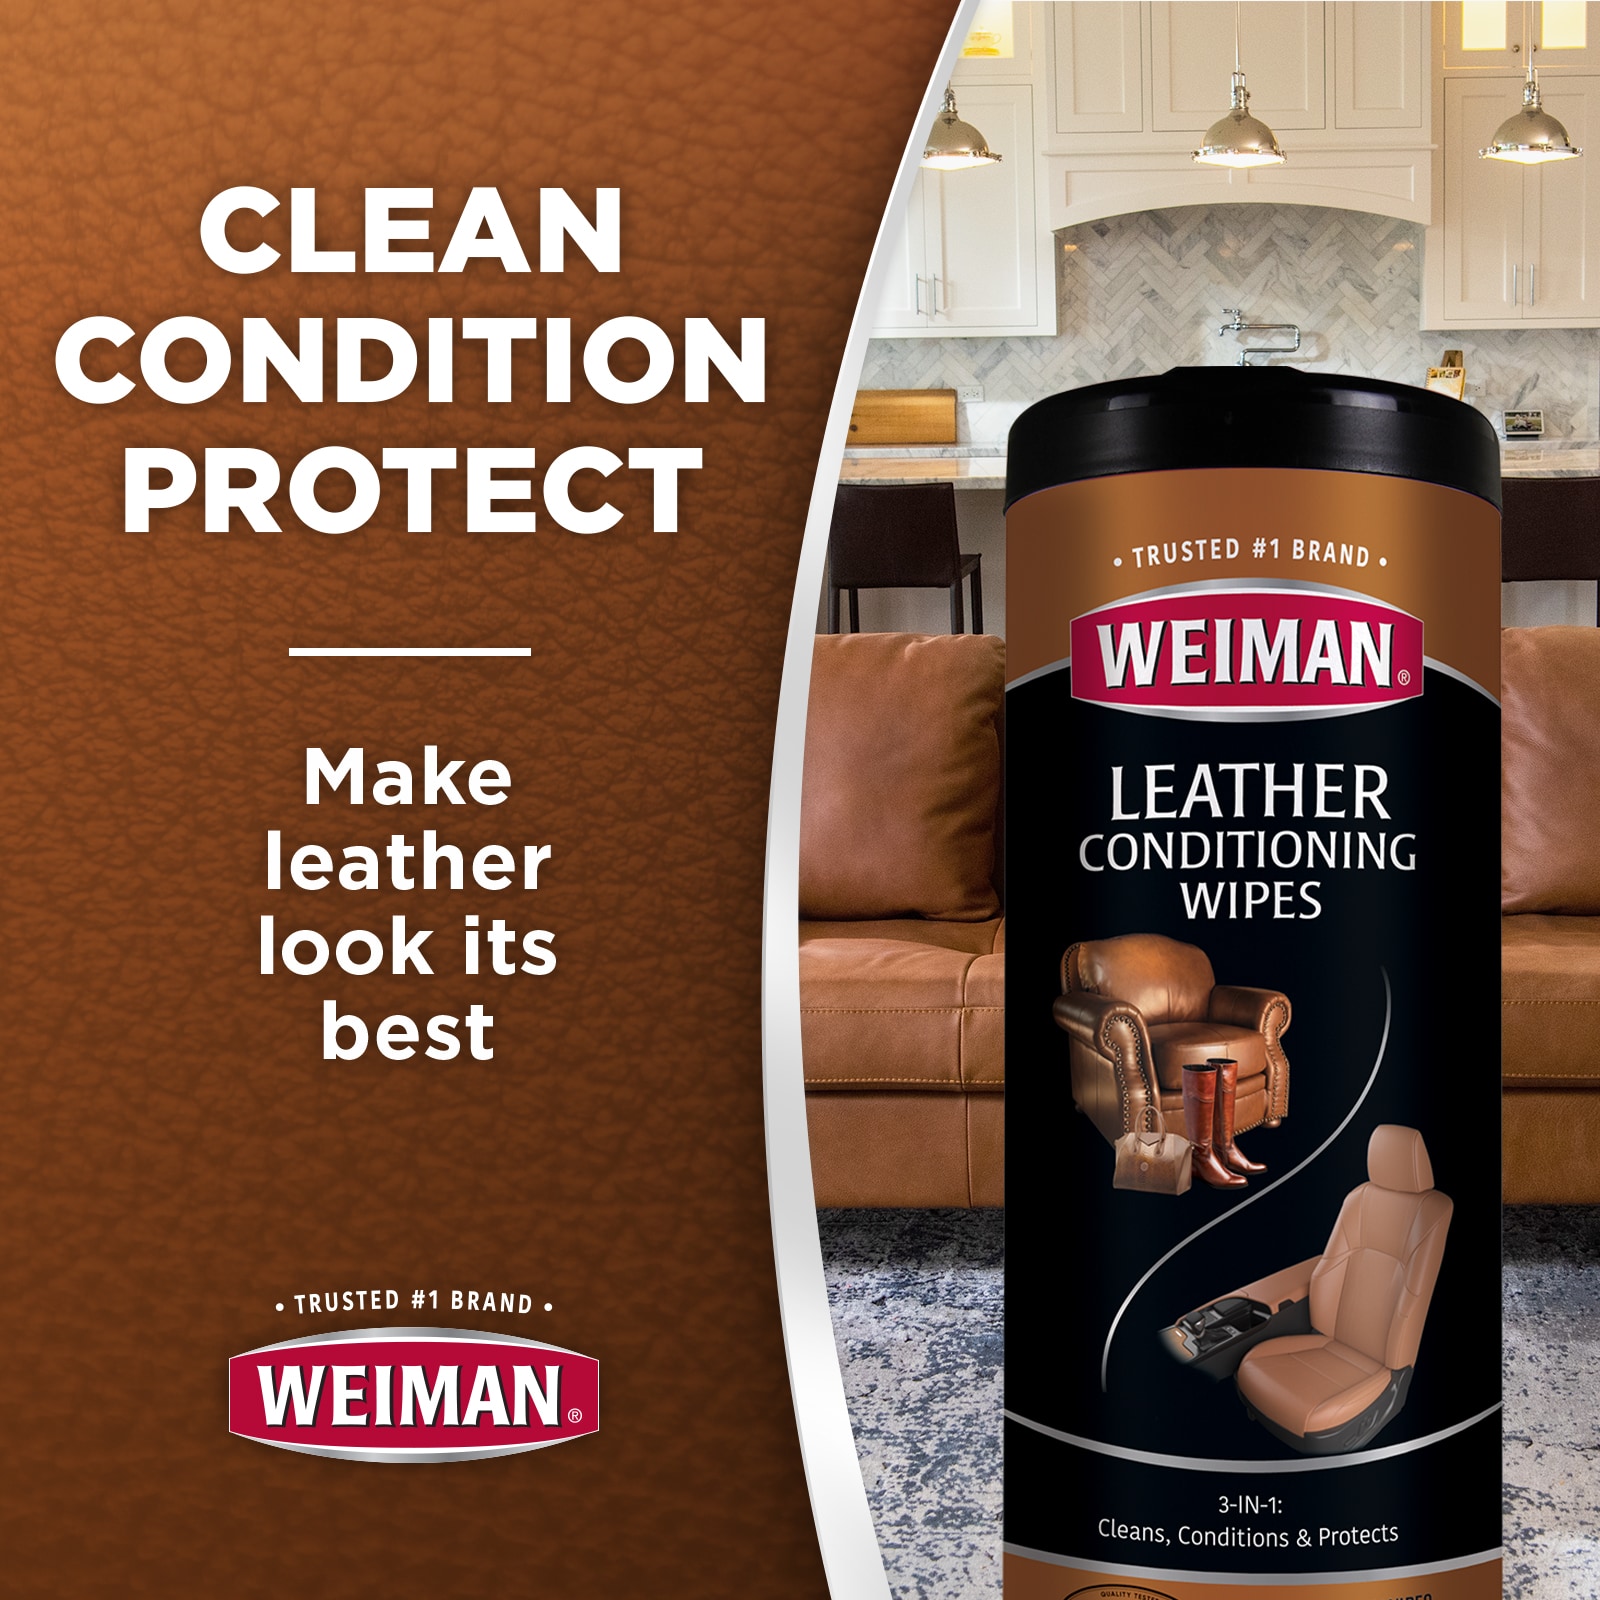 Weiman Leather Cleaner & Conditioner - 16 fl oz bottle